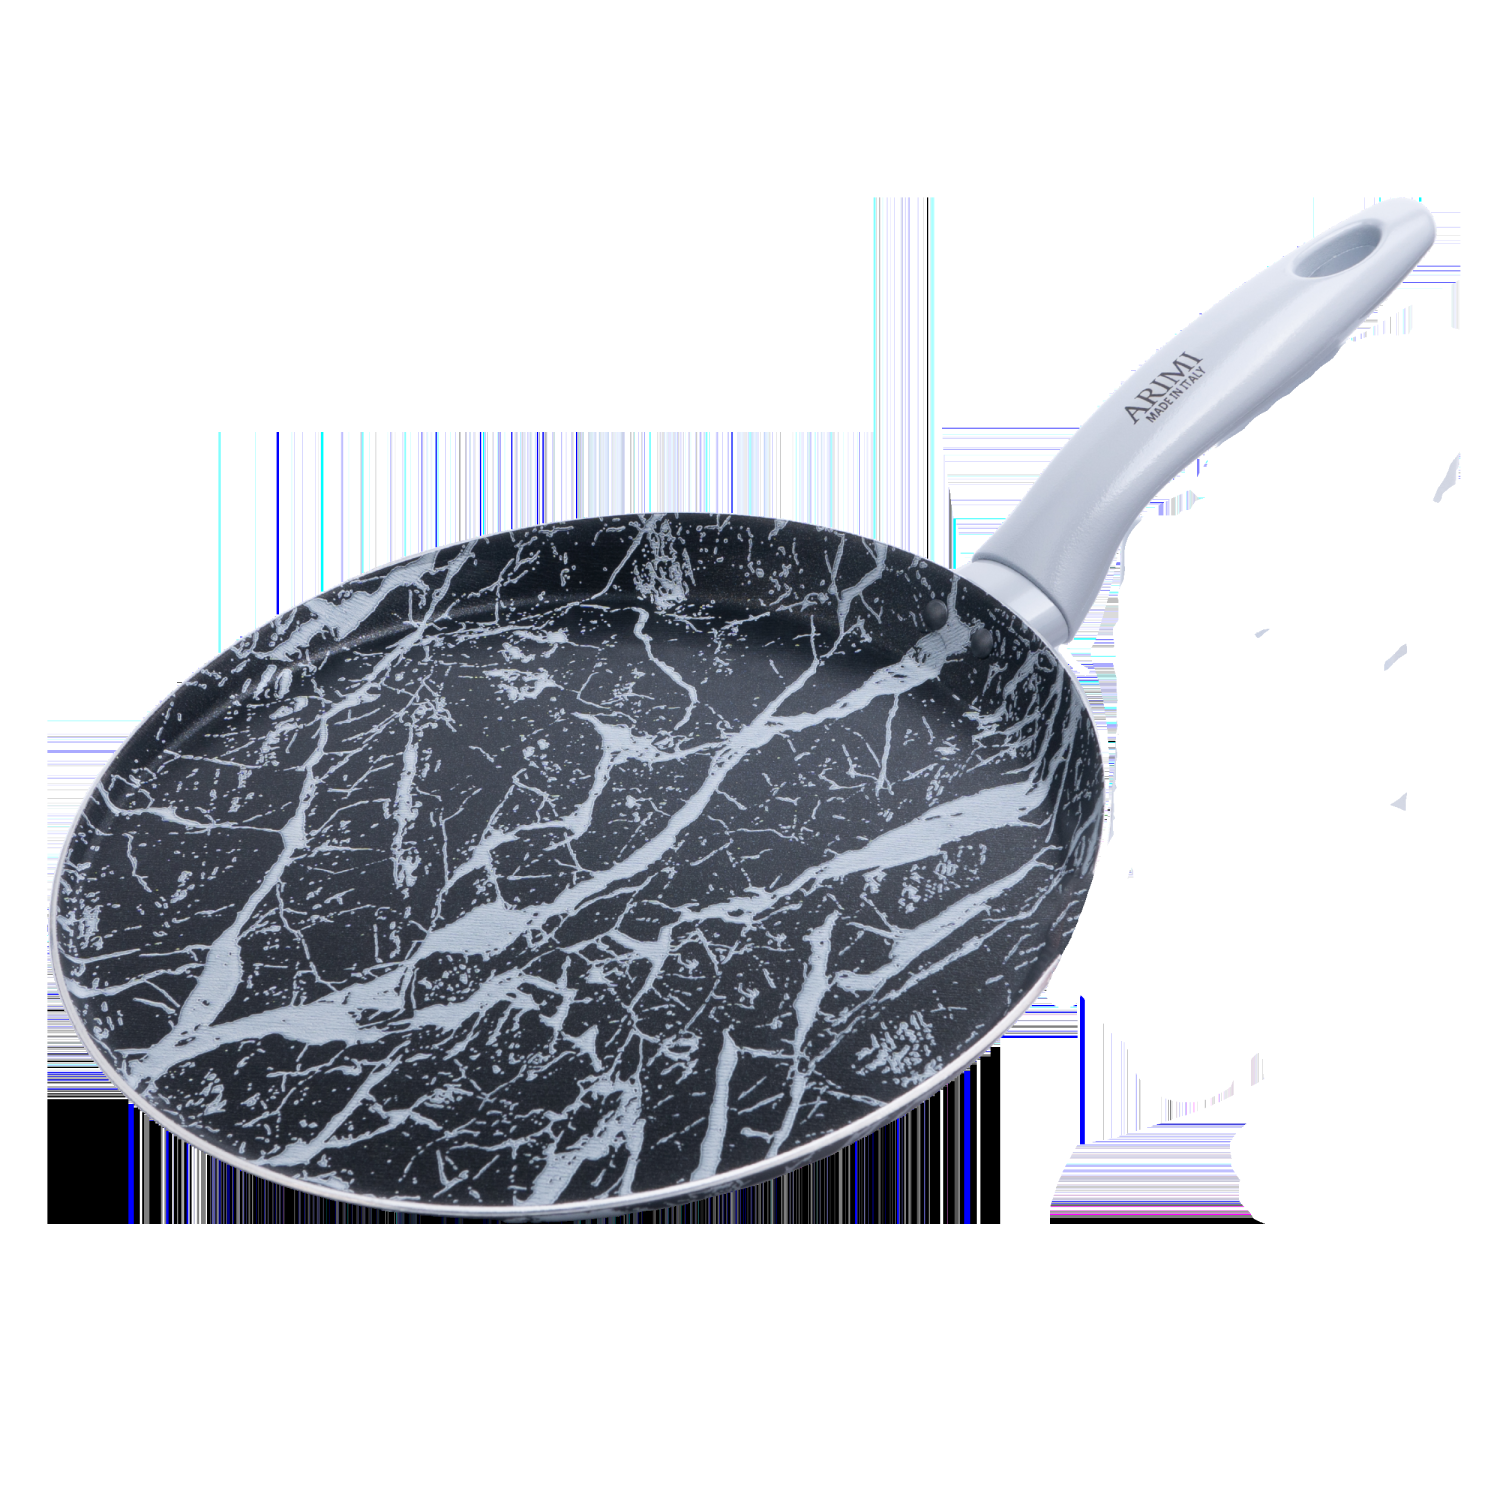 Diamond Marble Italian Crepe & Pancake Pan 25cm - 10 inch - PFOA Free - Black & Grey